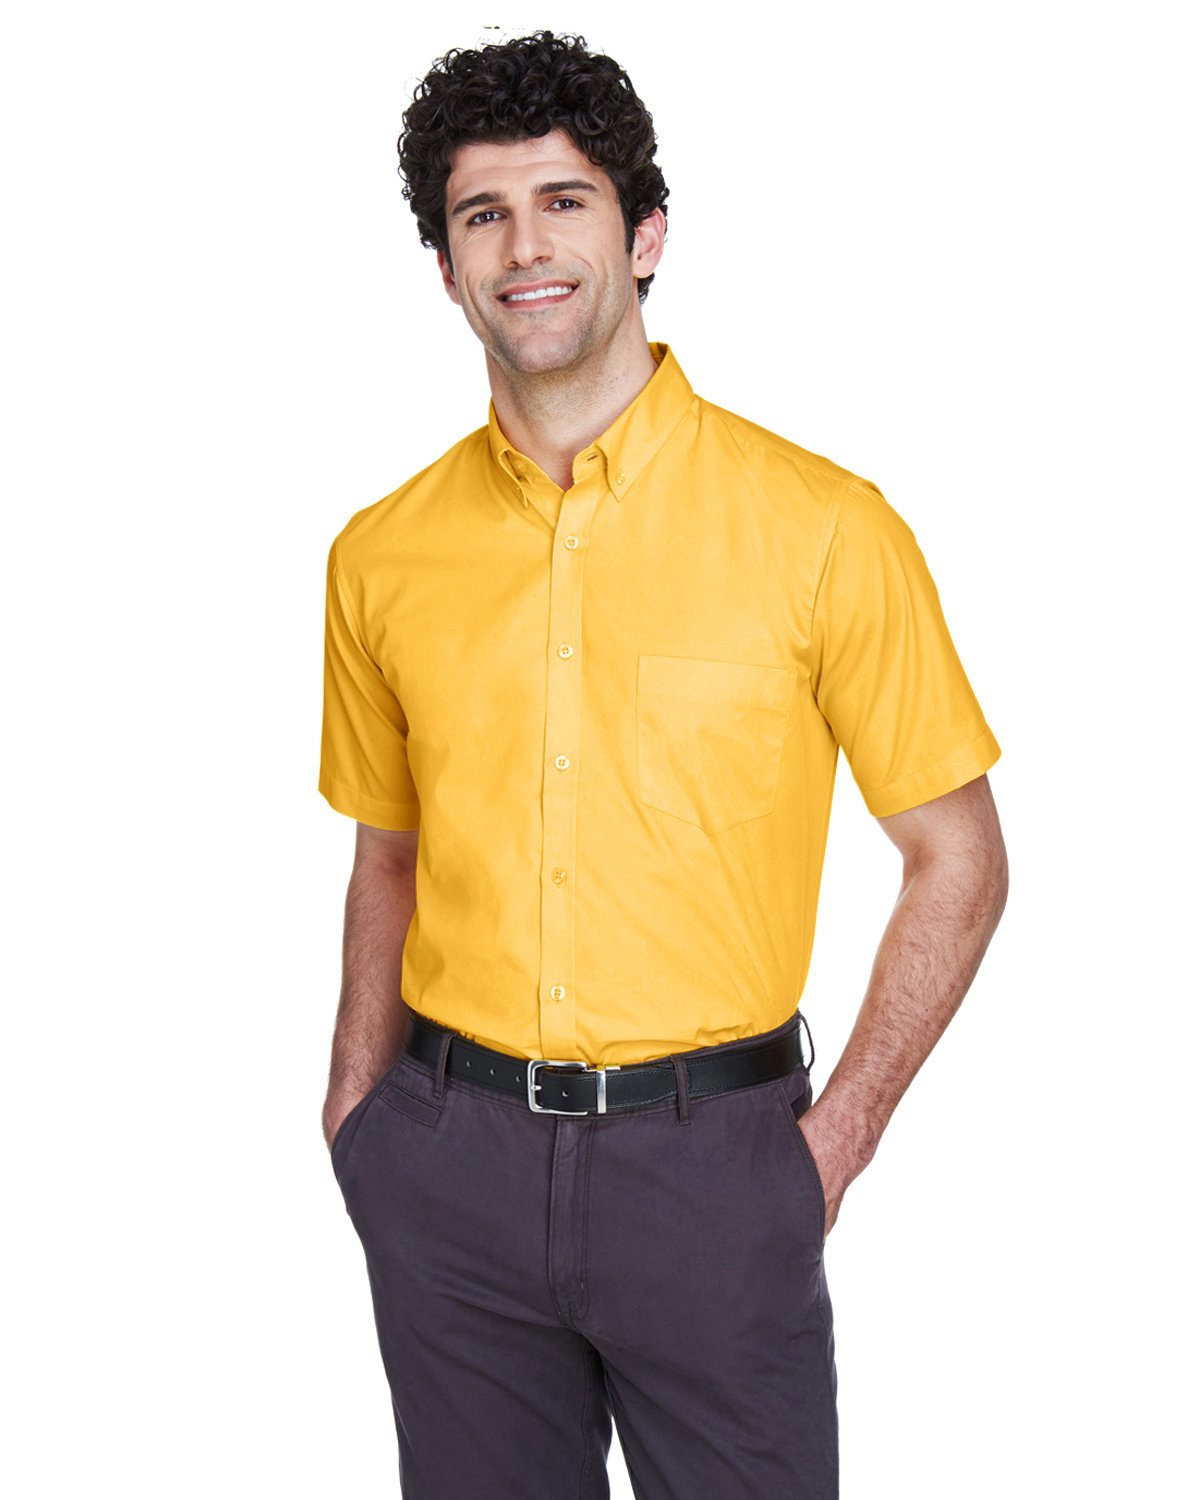 Core 365 Men's Optimum Short-Sleeve Twill Shirt CAMPUS GOLD 